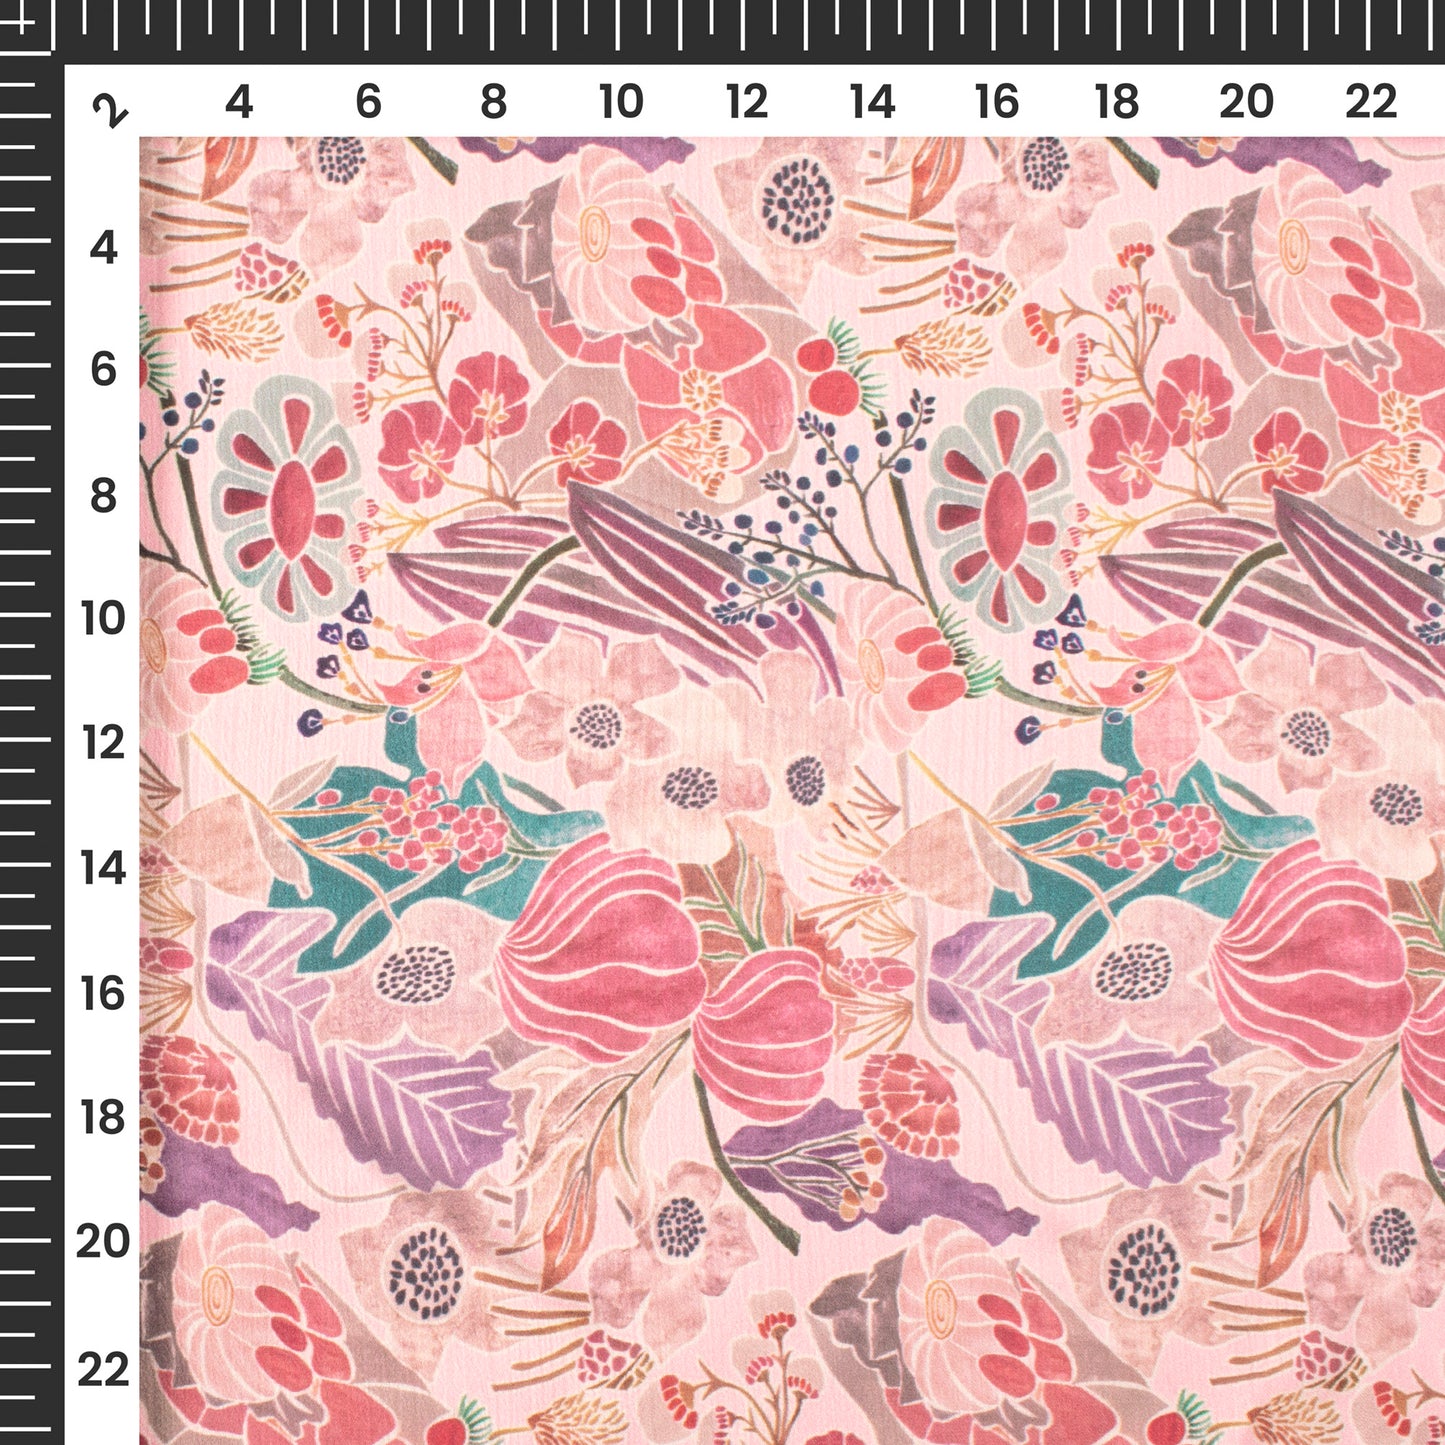 Light Pink Floral Digital Print Chiffon Satin Fabric